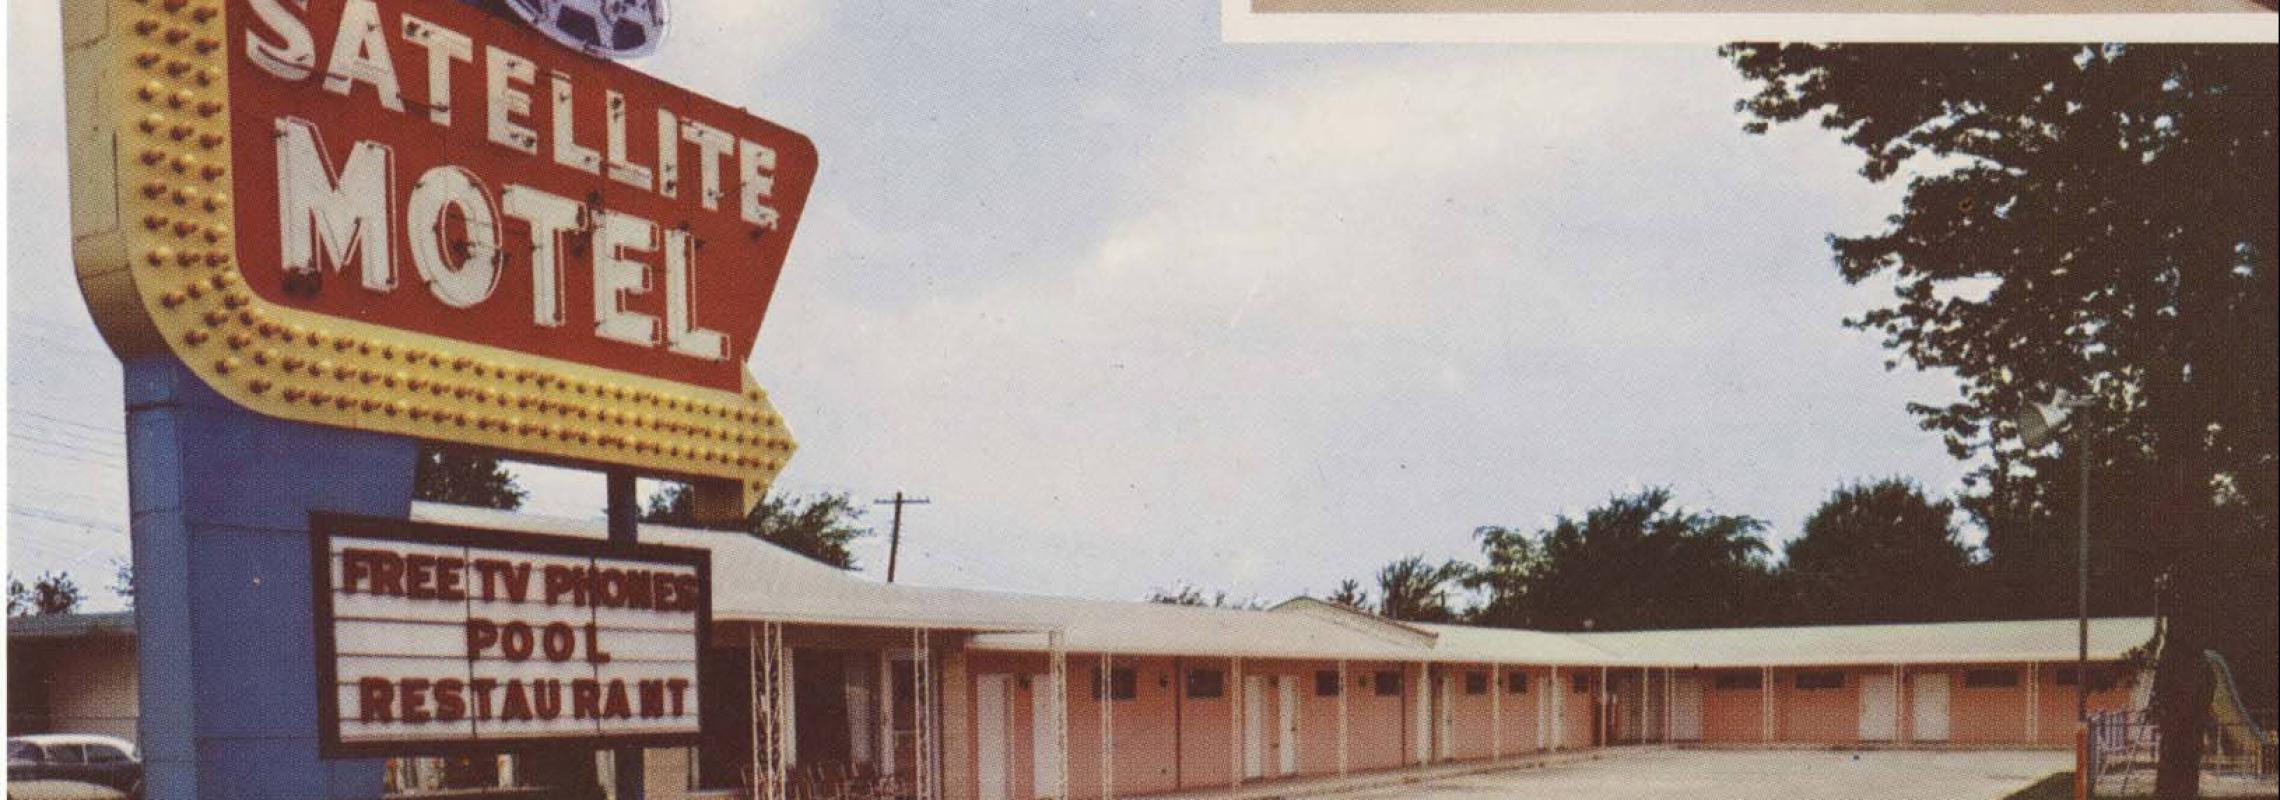 1950's postcard of Satellite Motel in Springfield, Mo.